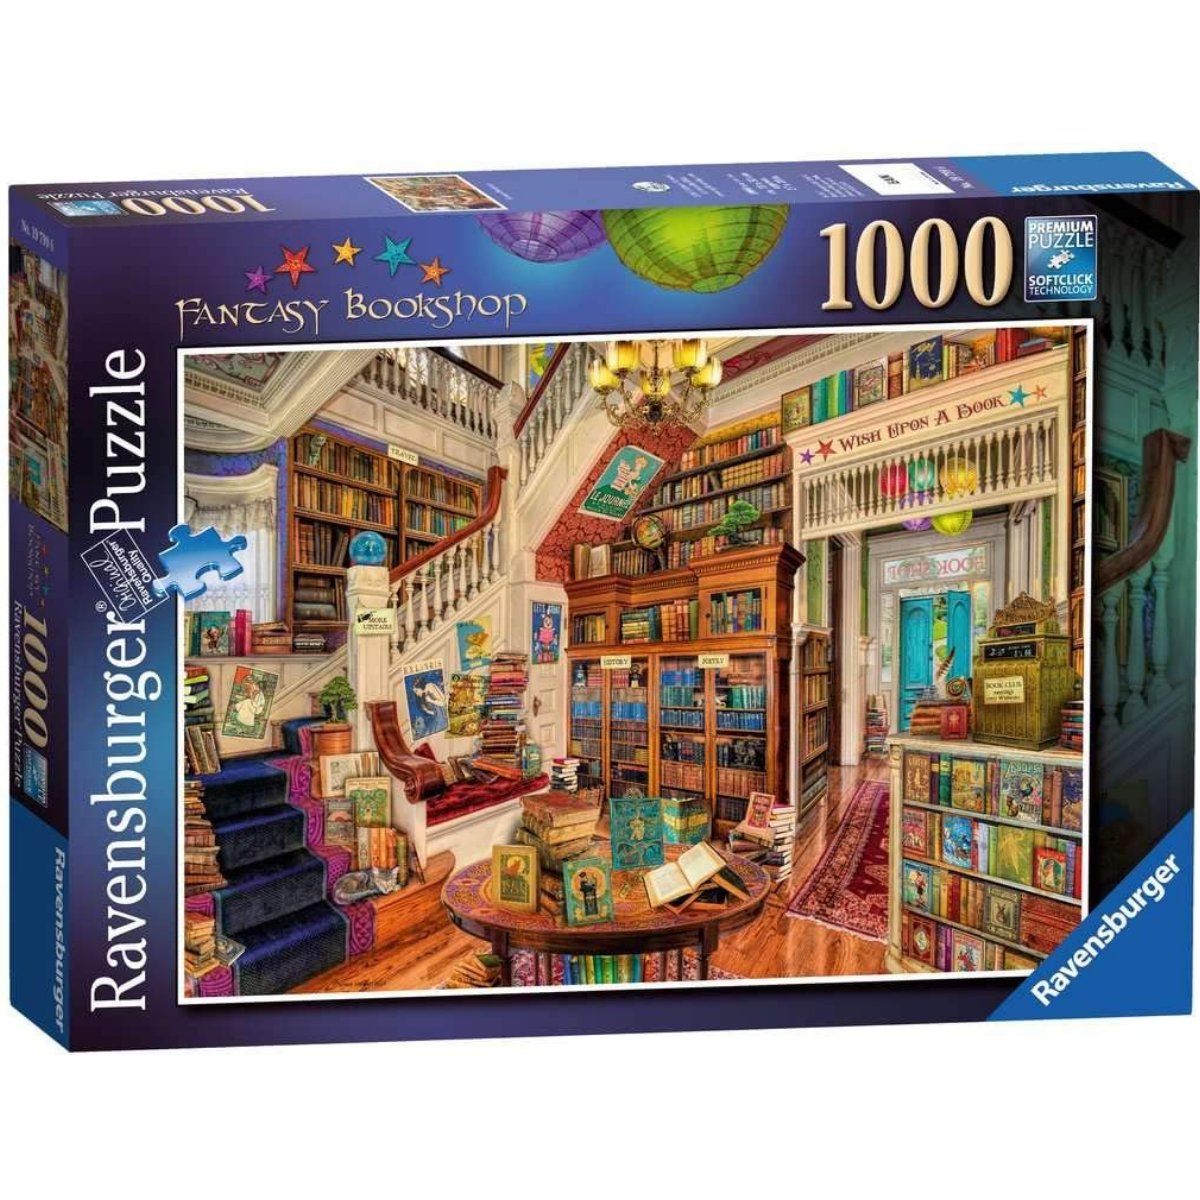 Ravensburger The Fantasy Bookshop Jigsaw Puzzle (1000 Pieces) - Phillips Hobbies